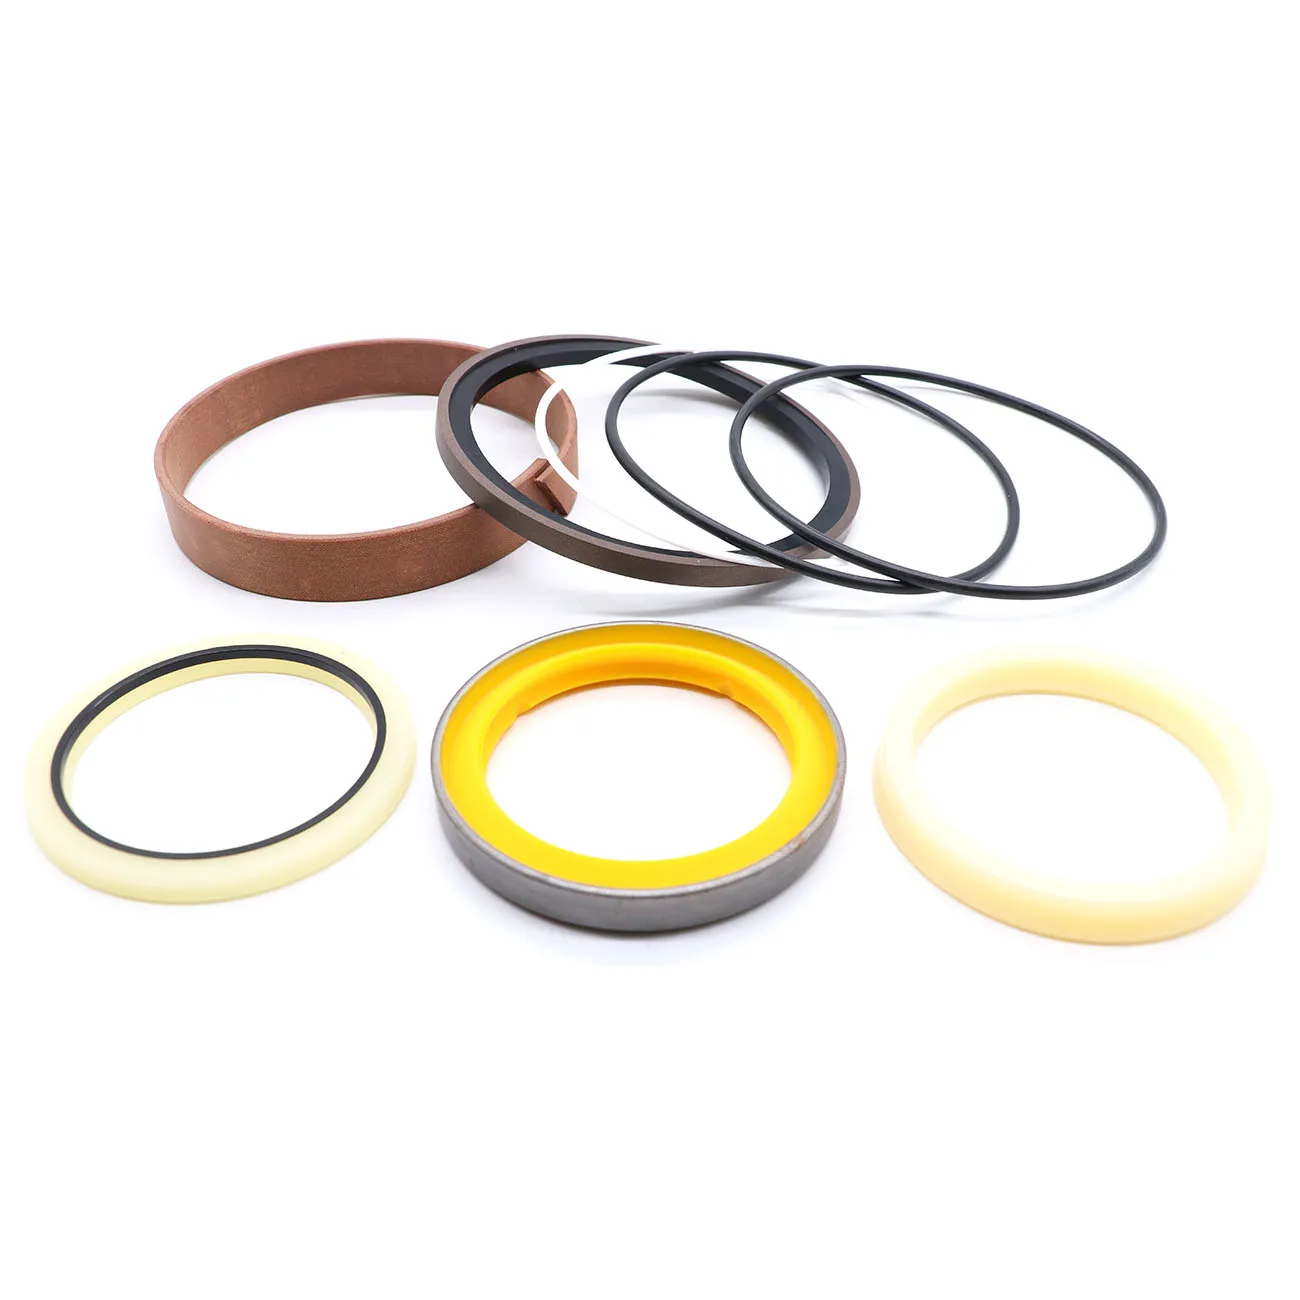 

High Quality Standard Size 365-1270 Hydraulic Cylinder Seal Kit Fits Caterpillar Backhoe Loader for Backhoe Seal Kit